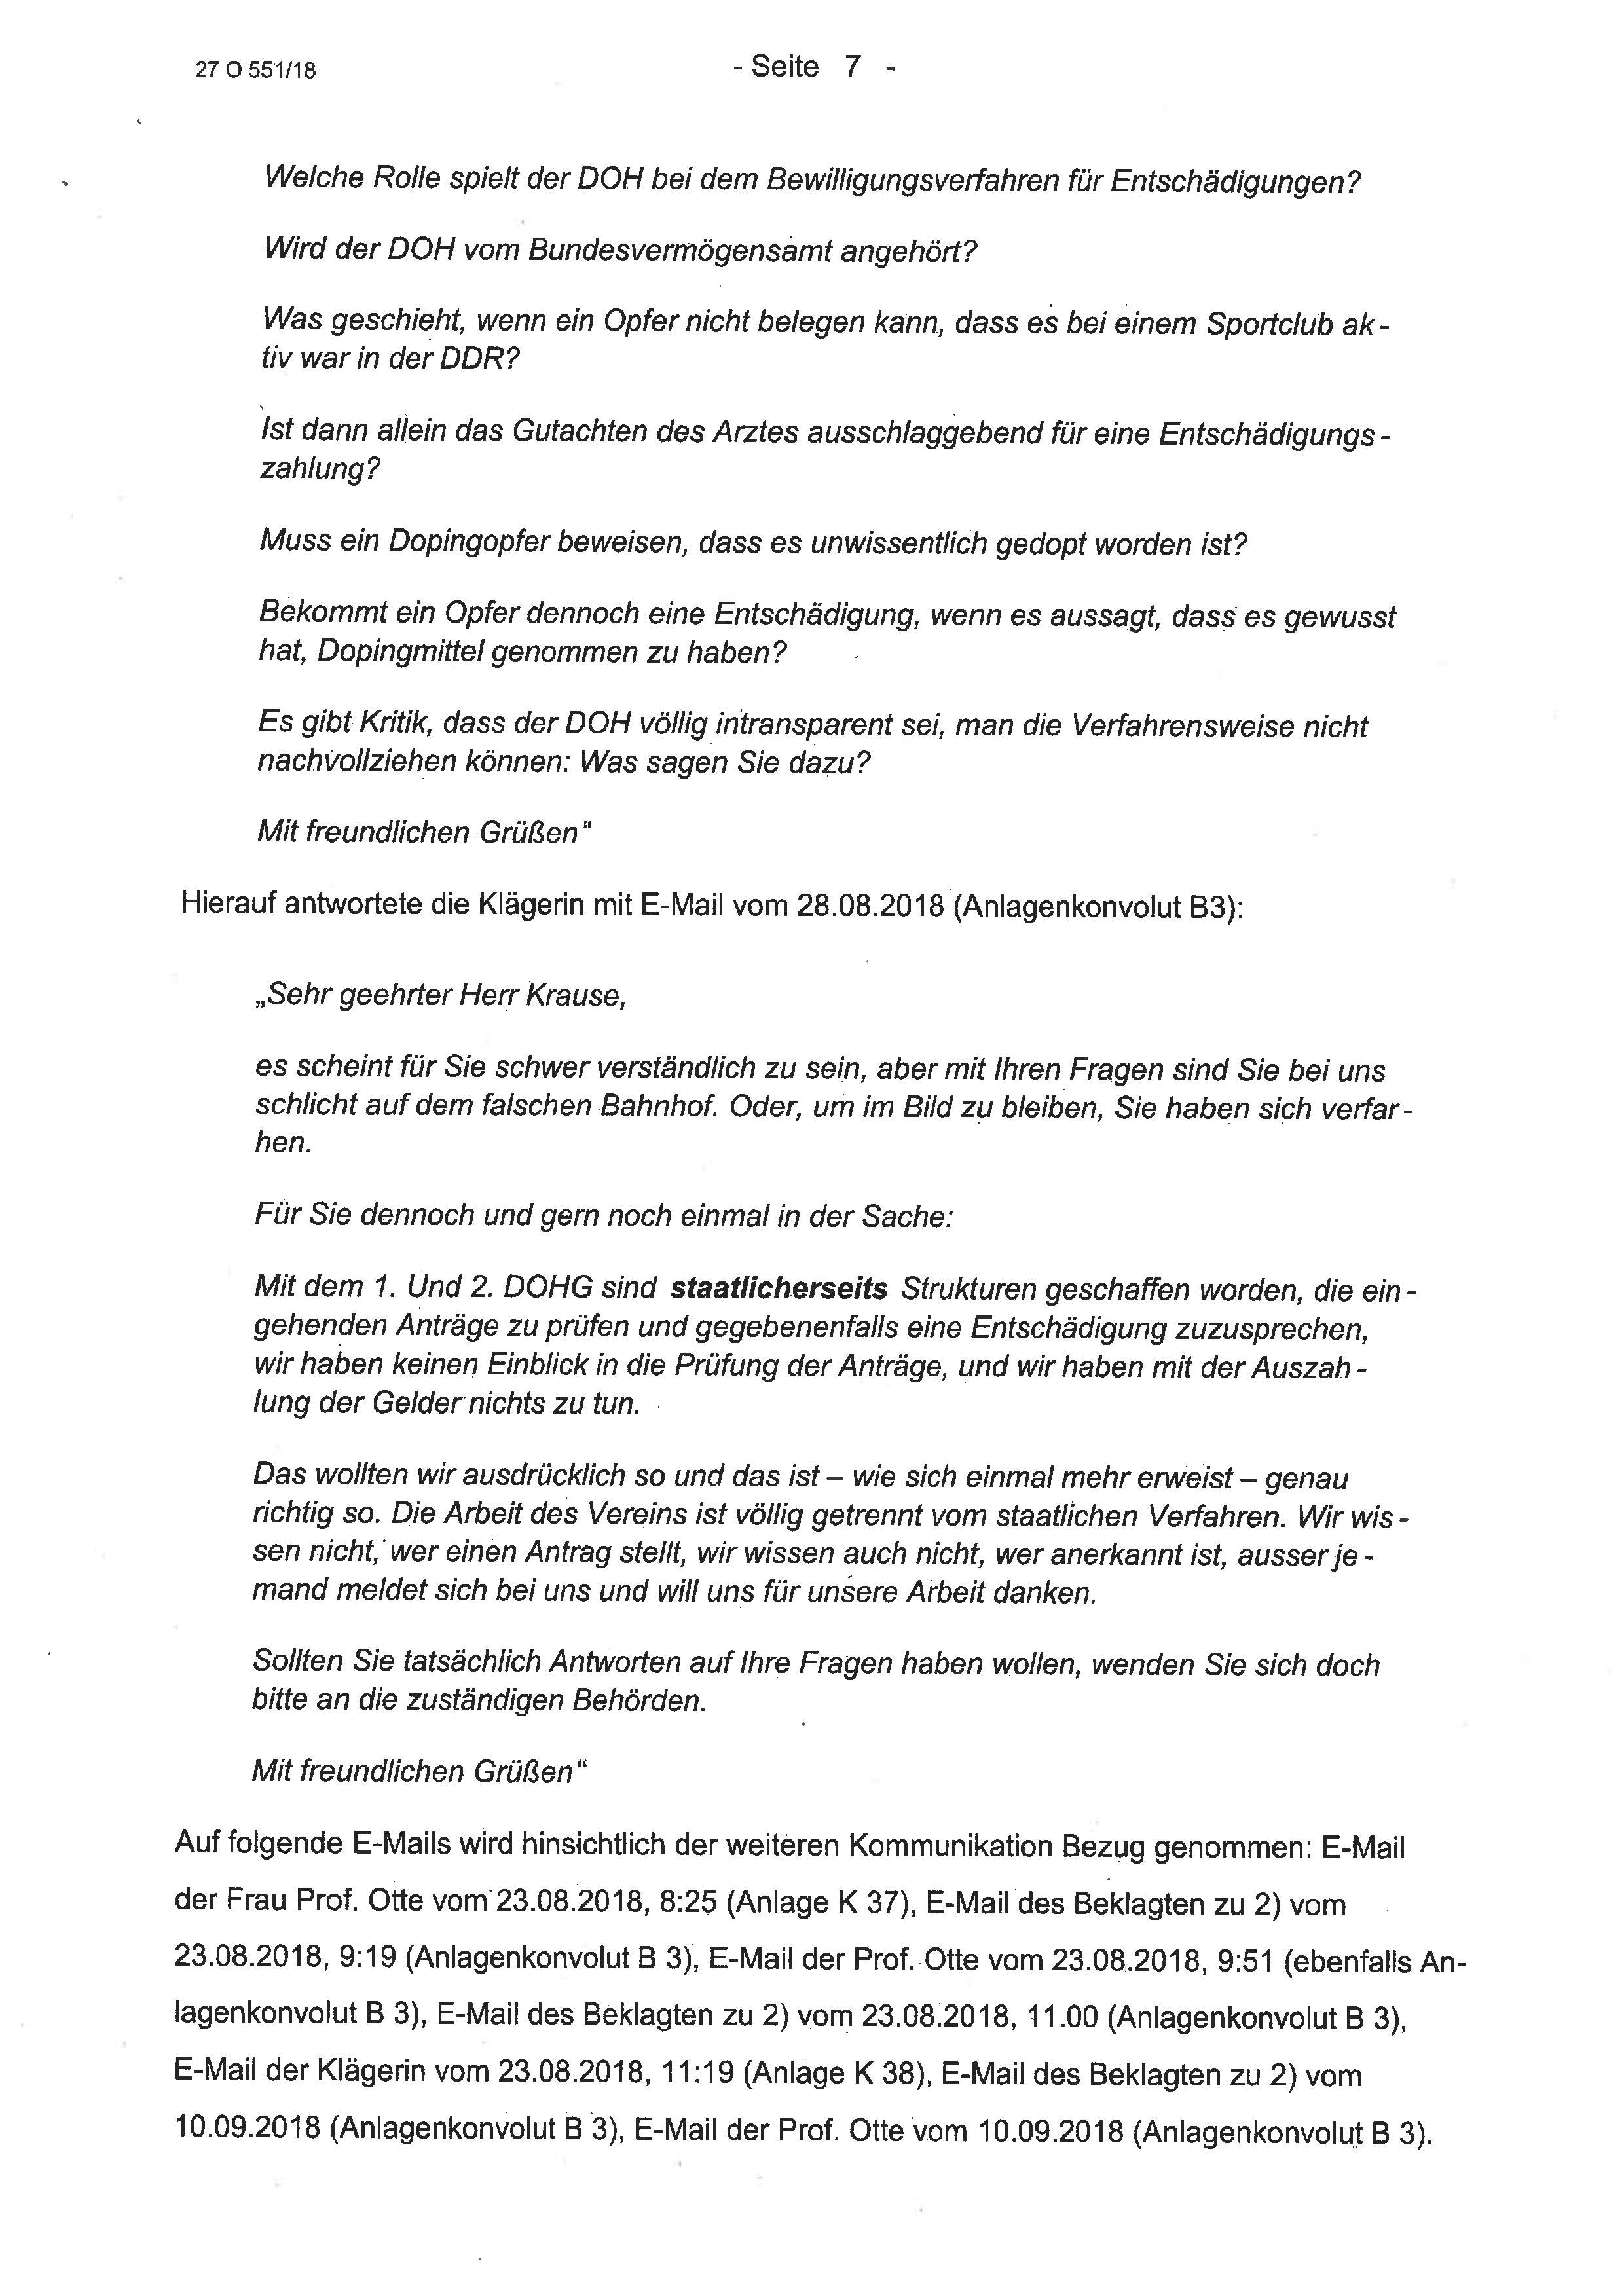 07. Mai 2019 – LG-Berlin Urteil zum Nordkurier – doping-opfer-hilfe e.V.